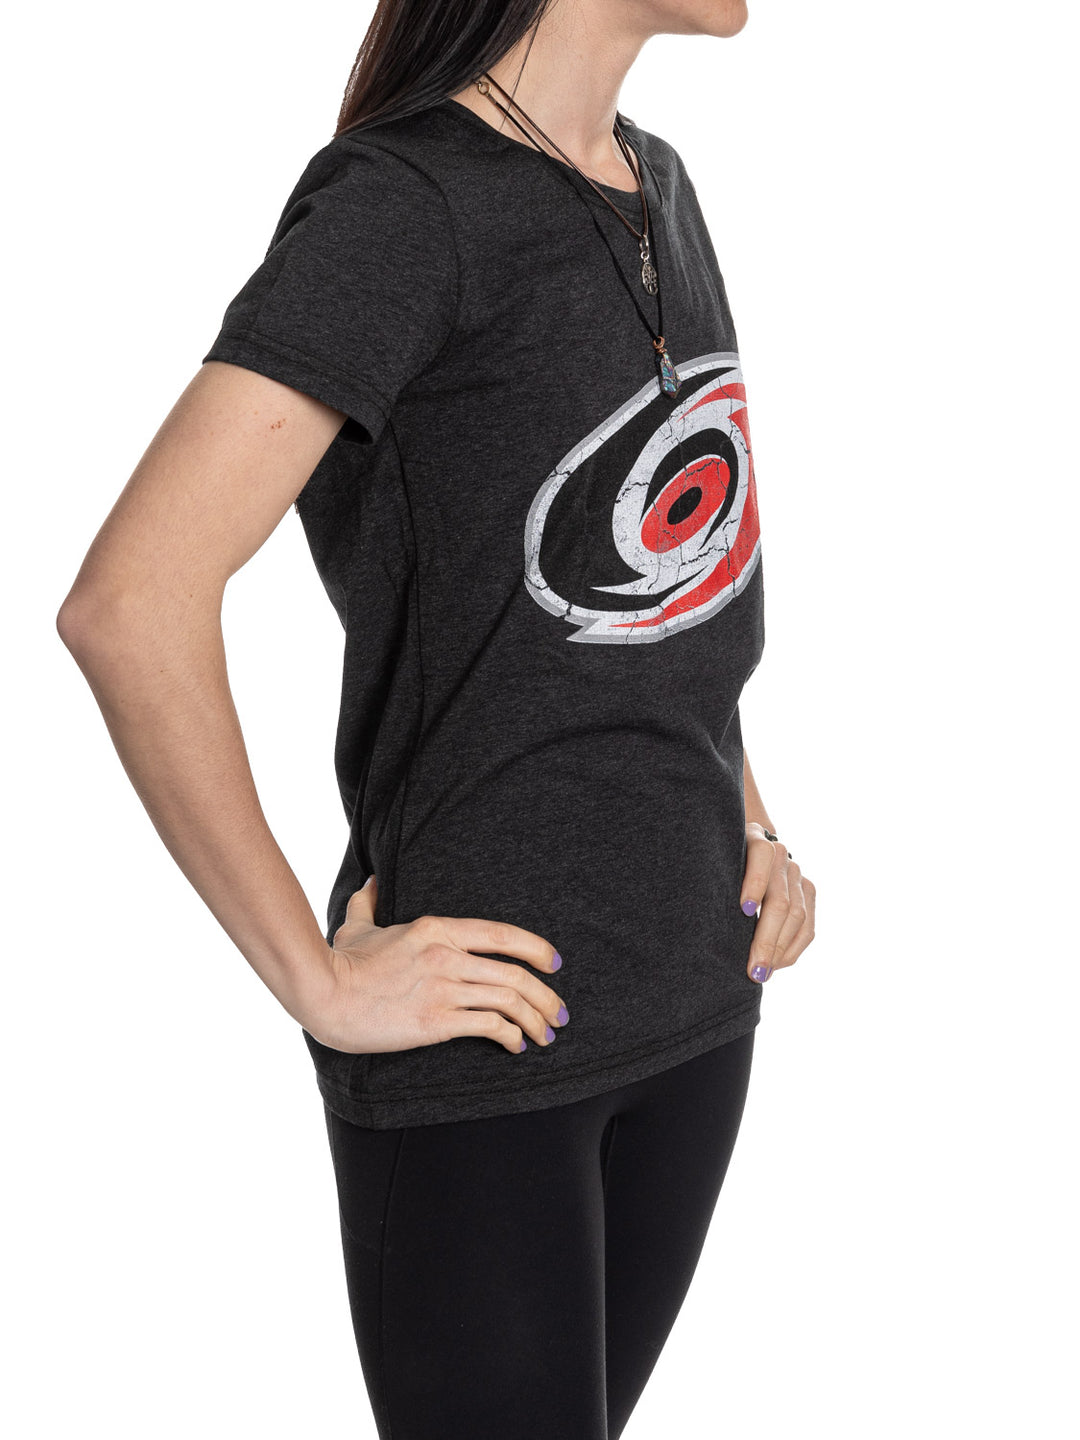 Carolina Hurricanes Women's Distressed Print Fitted Crew Neck Premium T-Shirt - Black